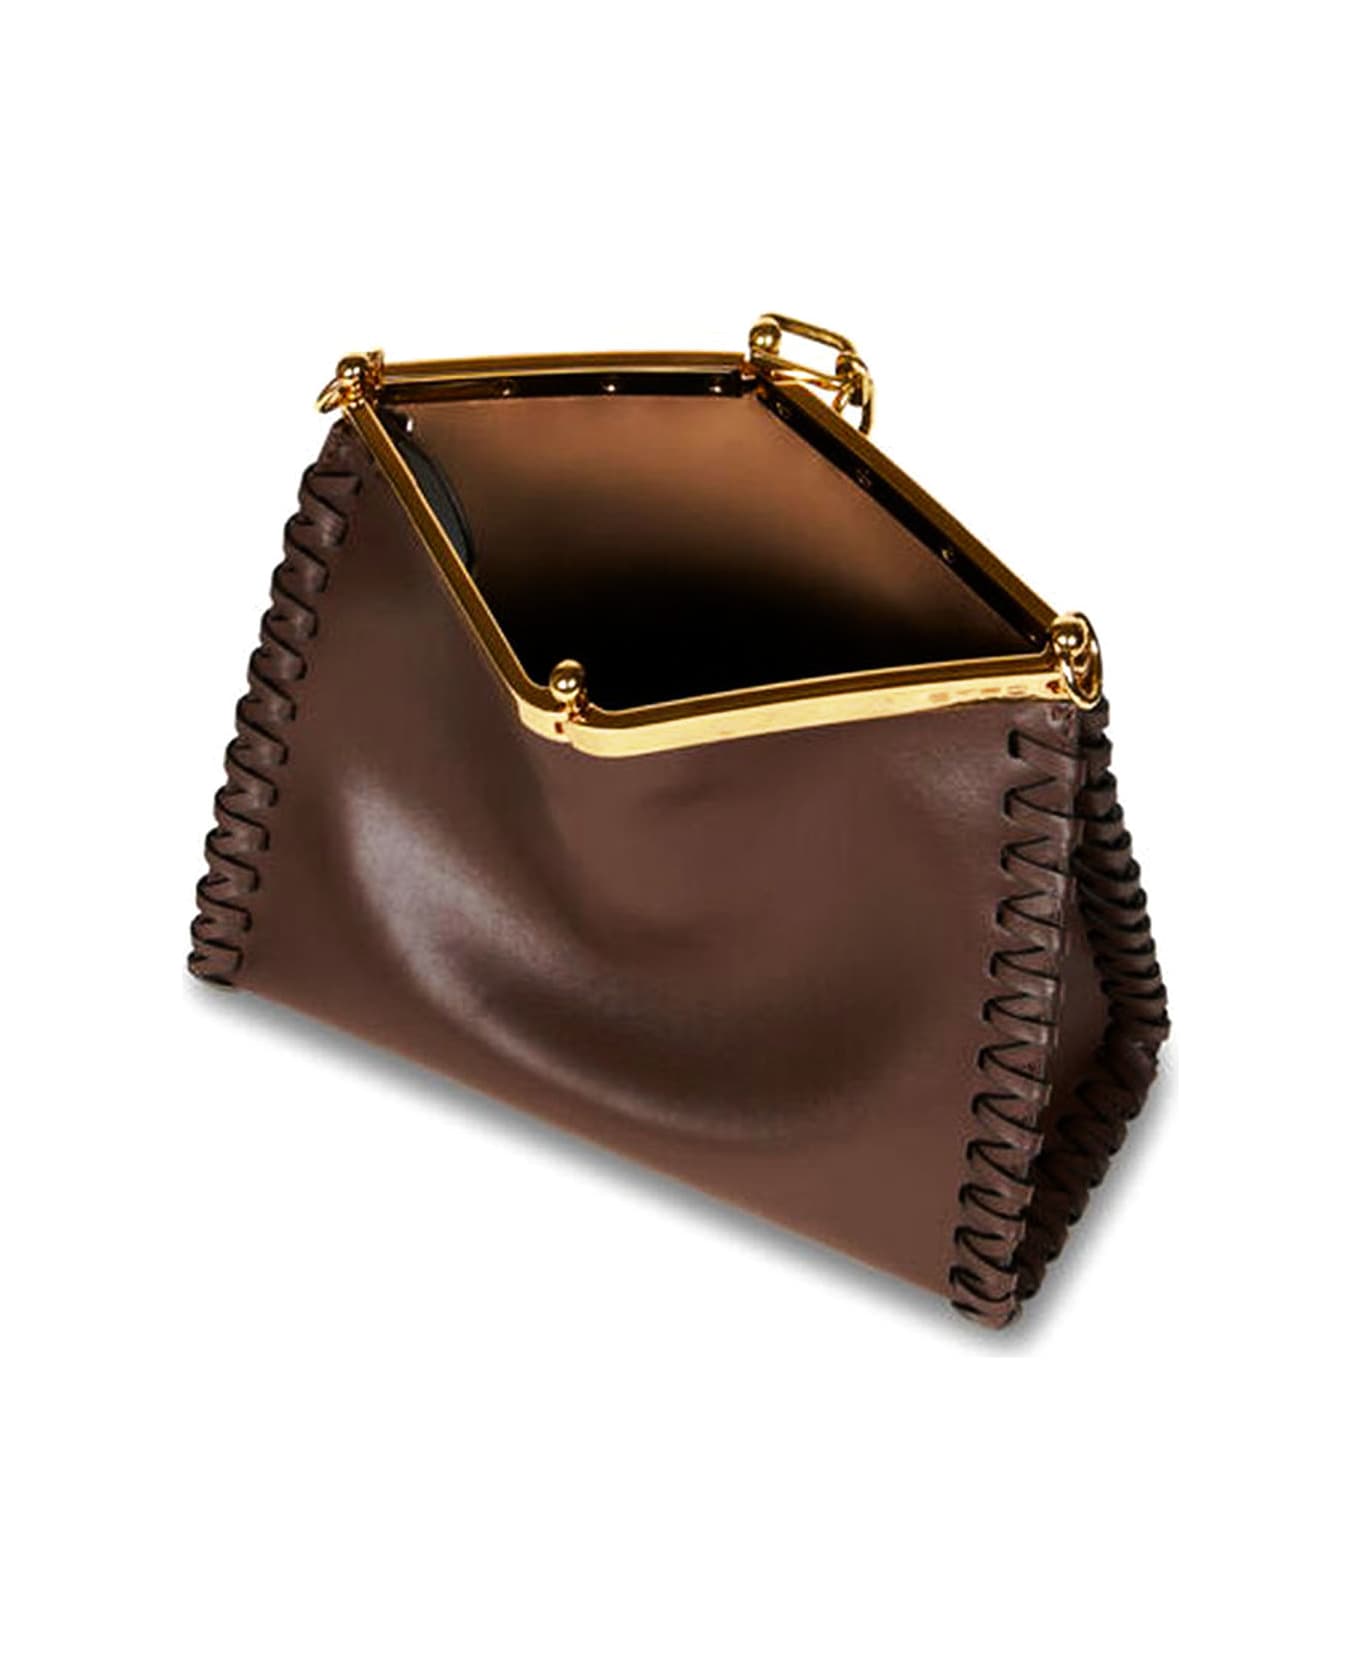 Etro Medium Vela Bag In Brown Leather - Brown